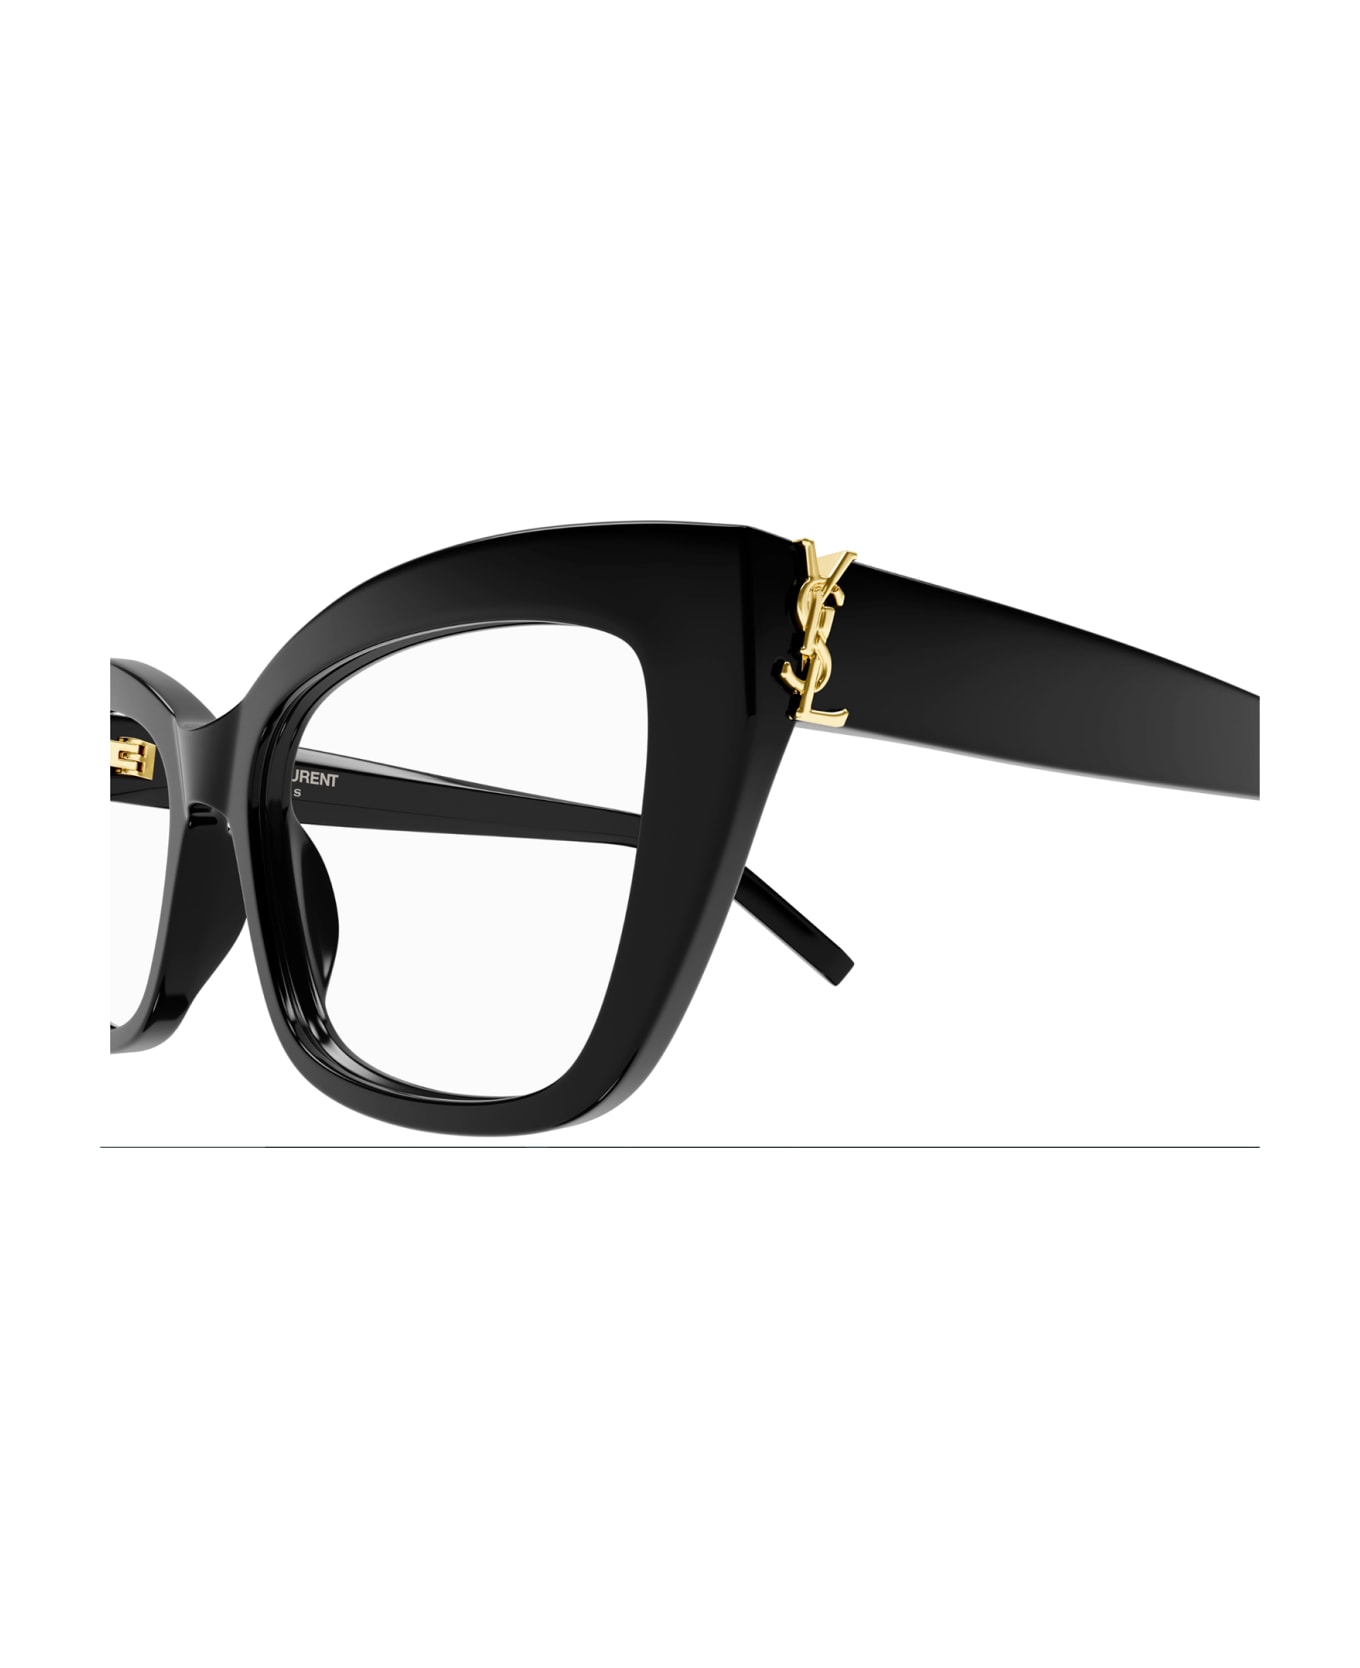 Saint Laurent Eyewear SL M117 Eyewear - Black Black Transpare アイウェア